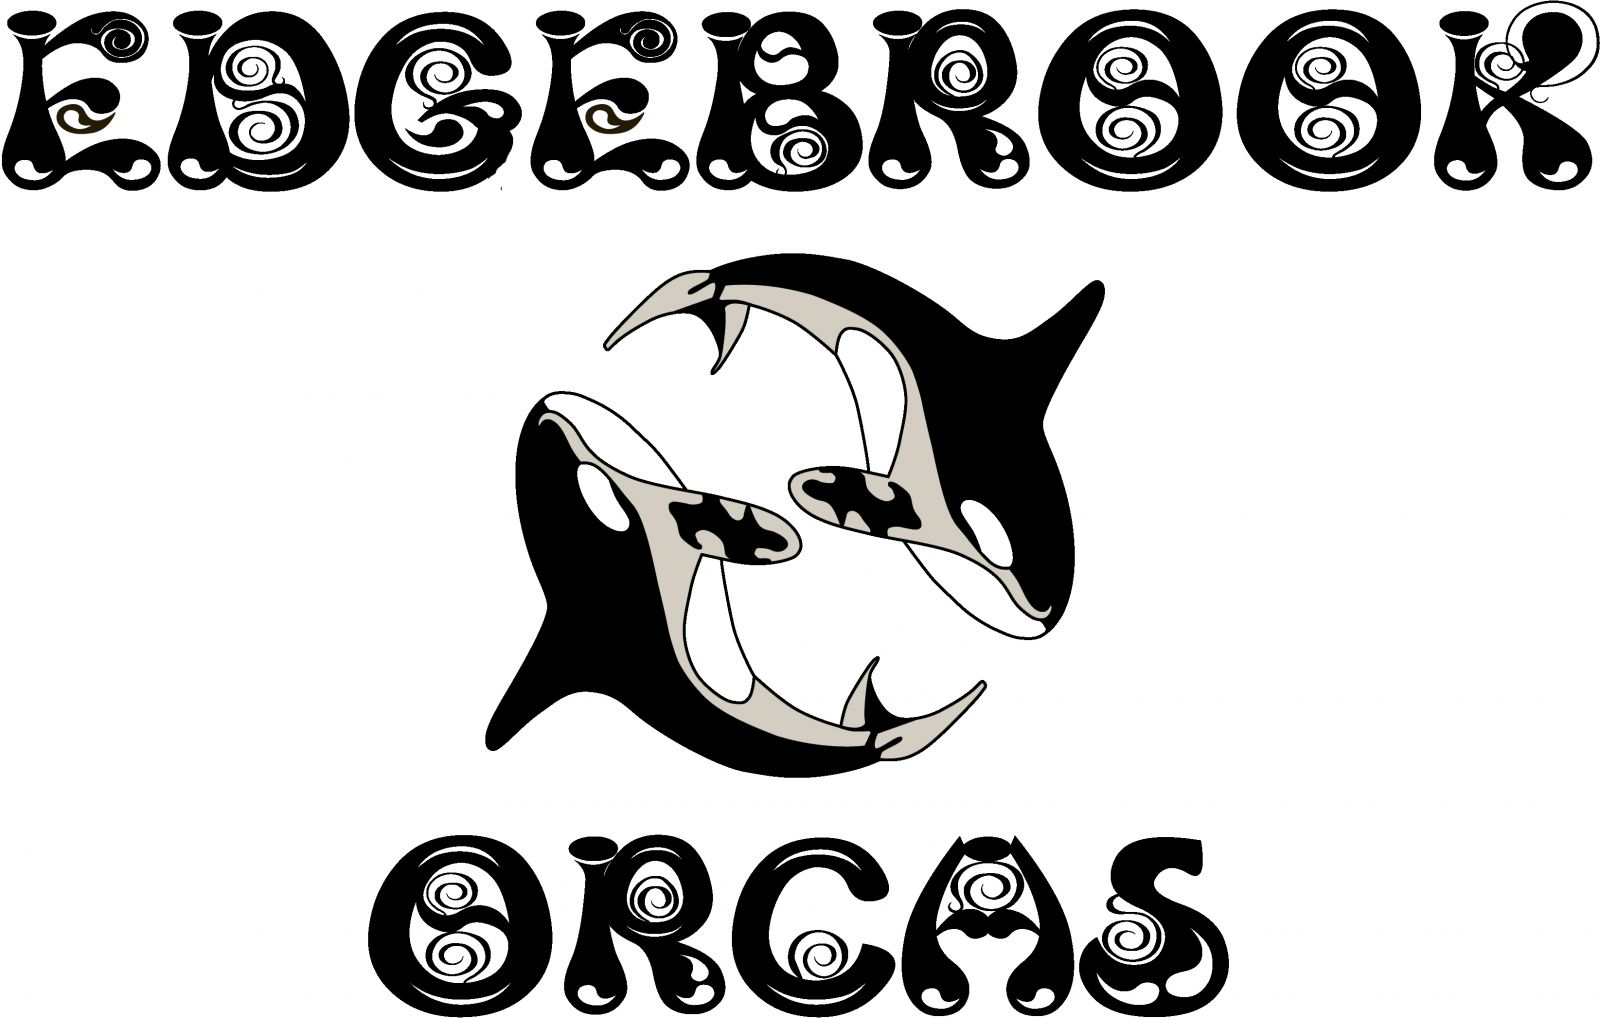 edgebrook Orcas logo.jpg